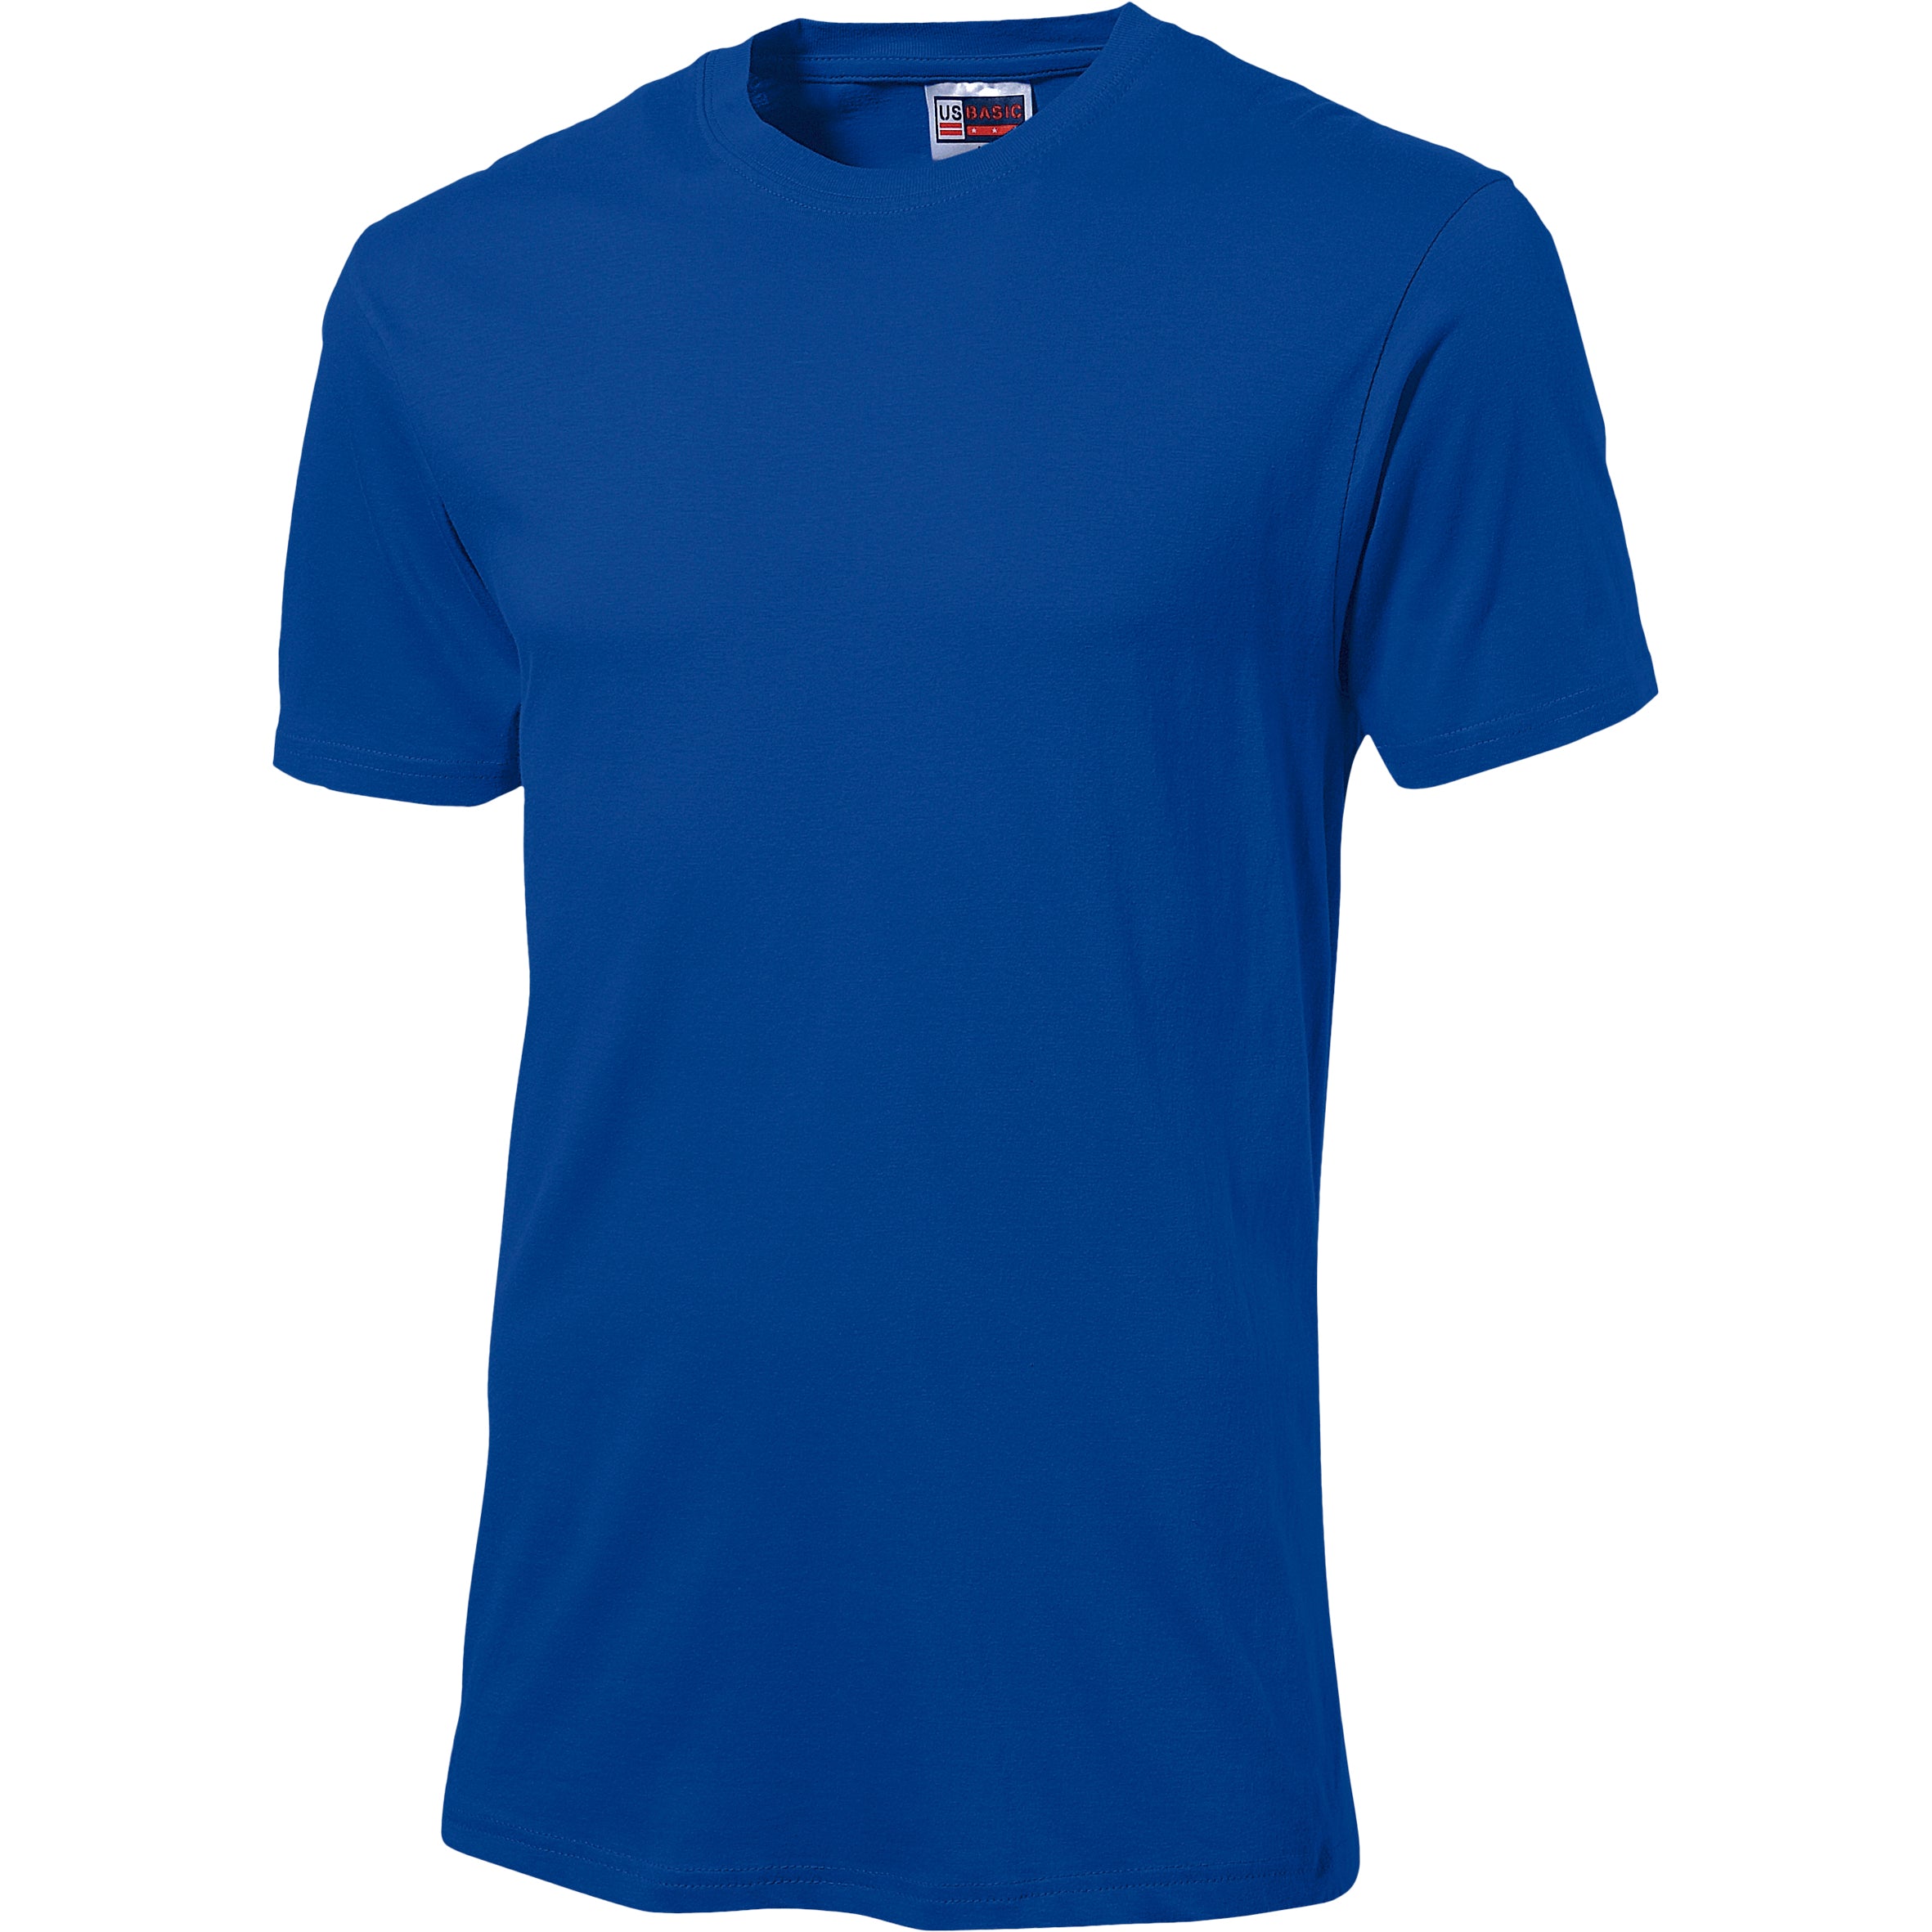 Unisex Super Club 135 T-Shirt L / Royal Blue / RB